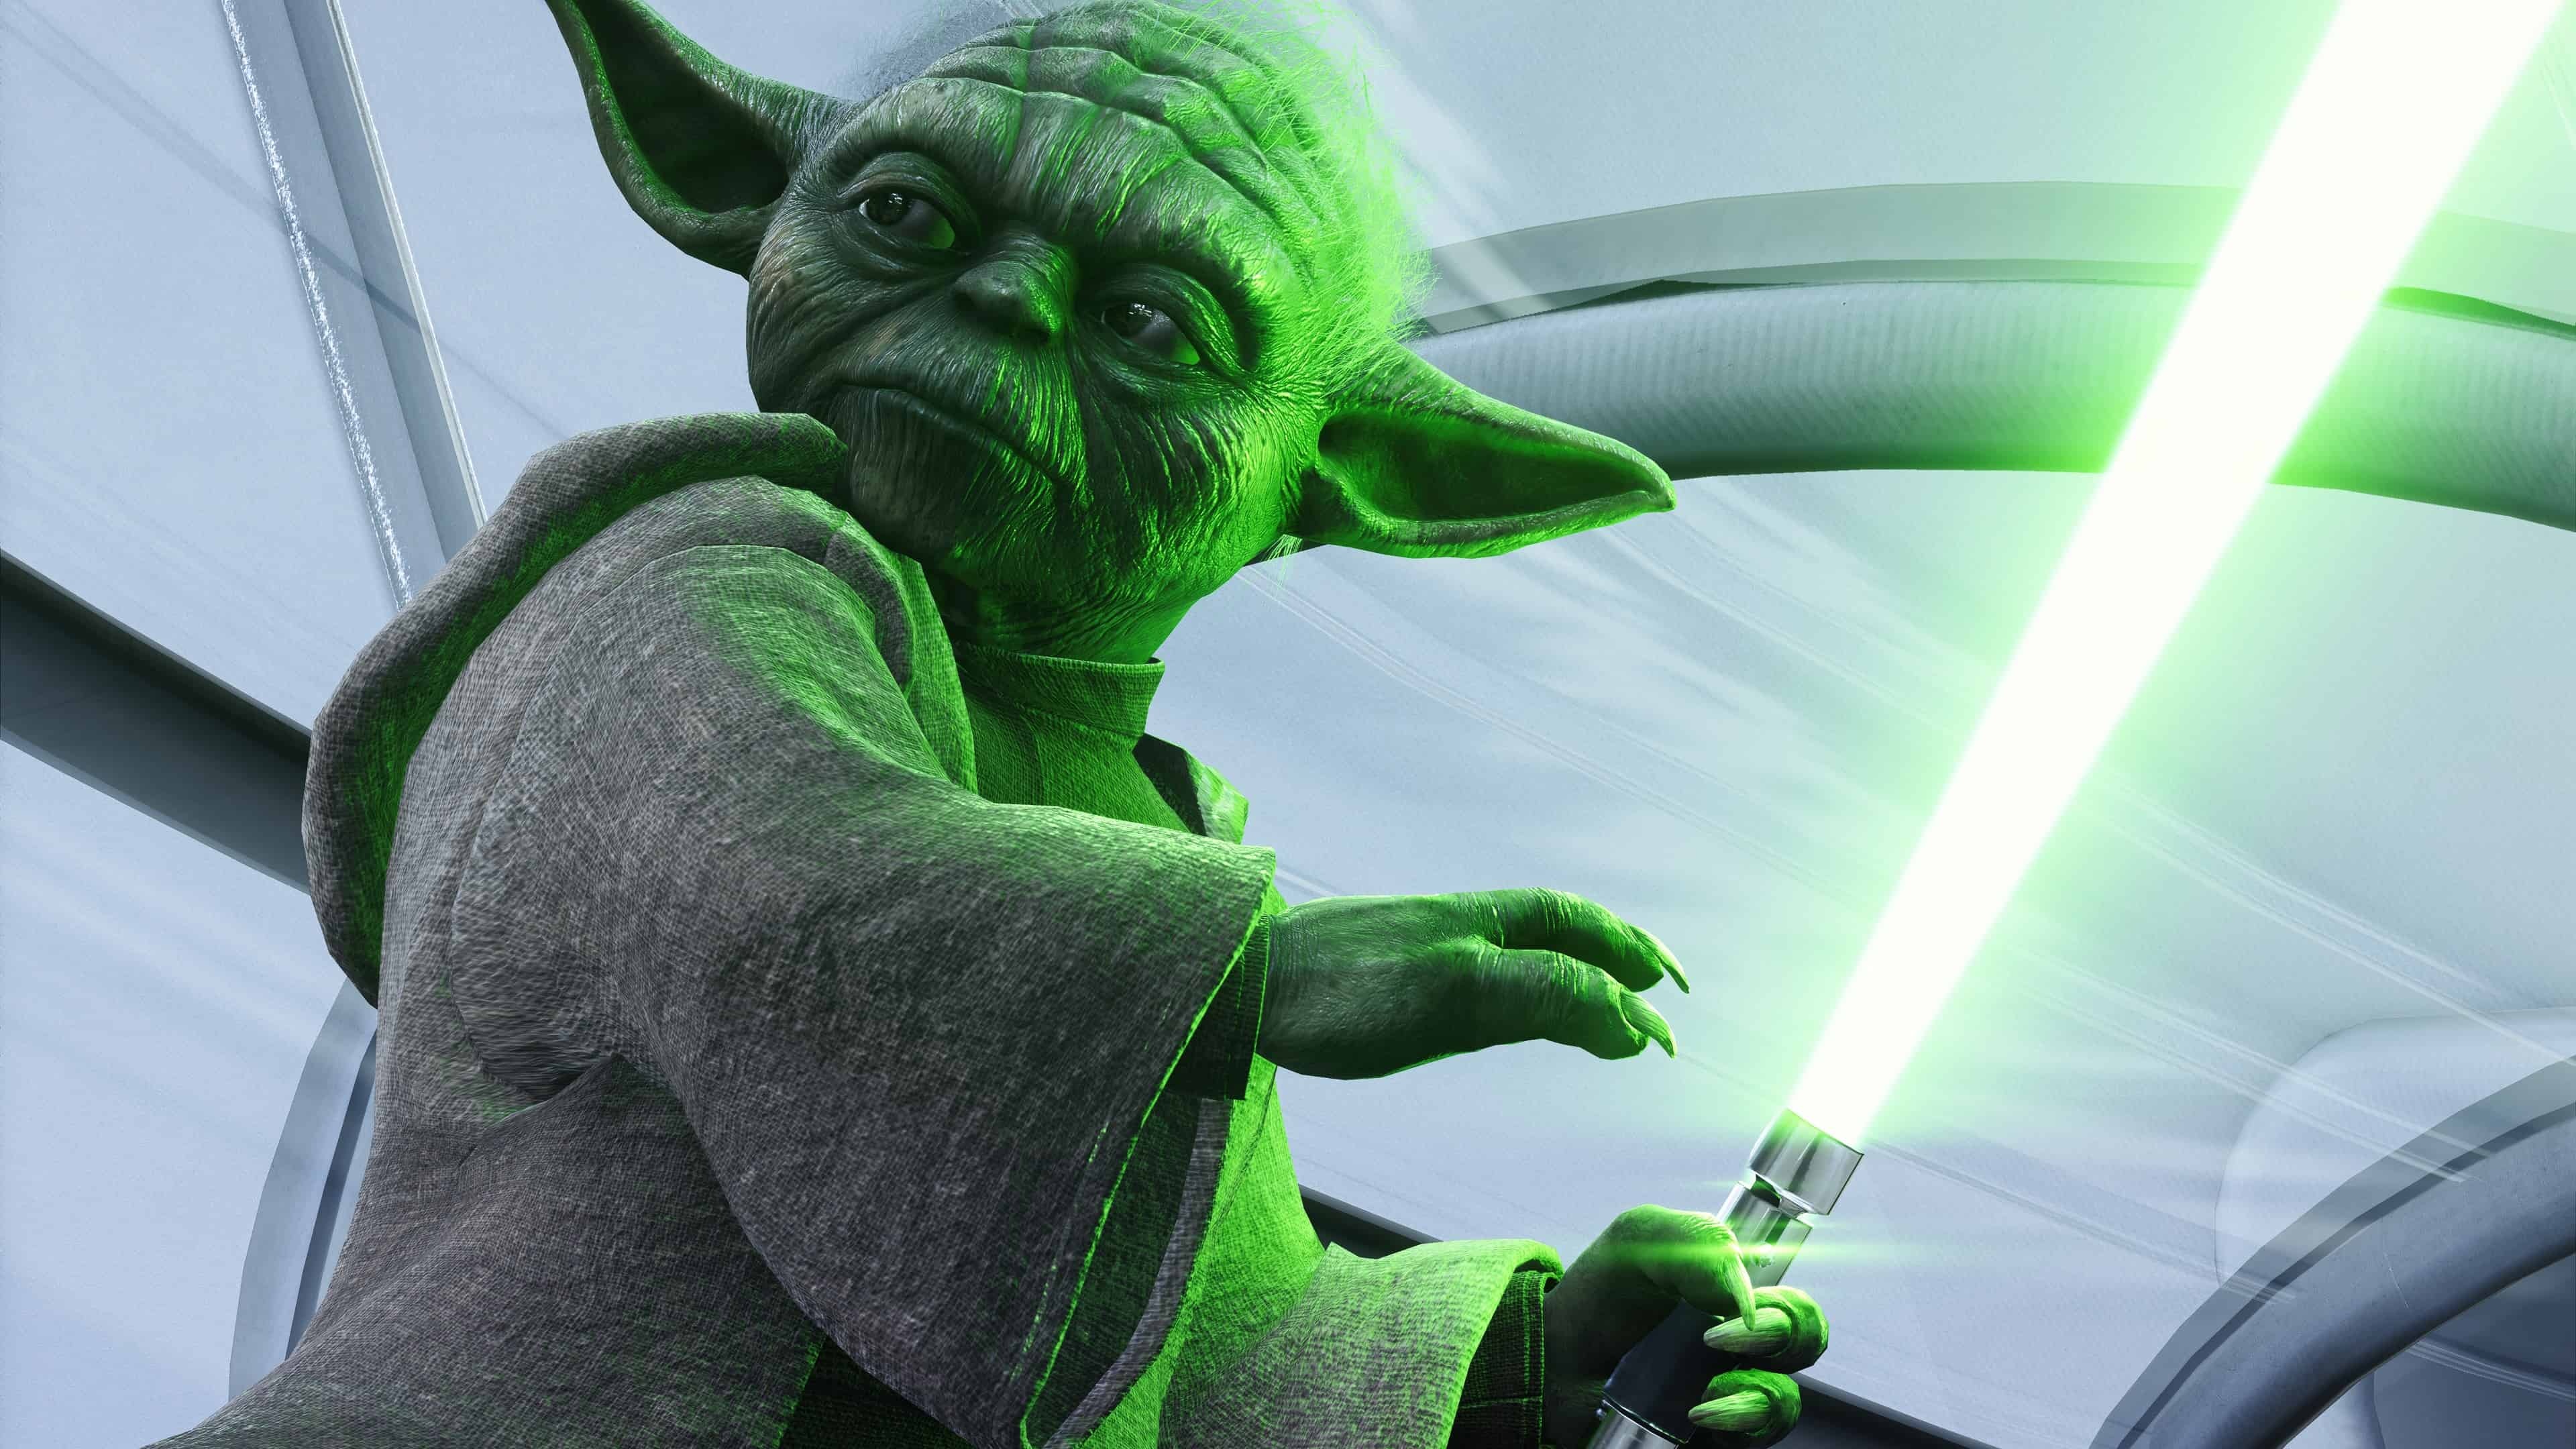 Star Wars Battlefront, Yoda, 4K Ultra HD, Background Image, 3840x2160 4K Desktop